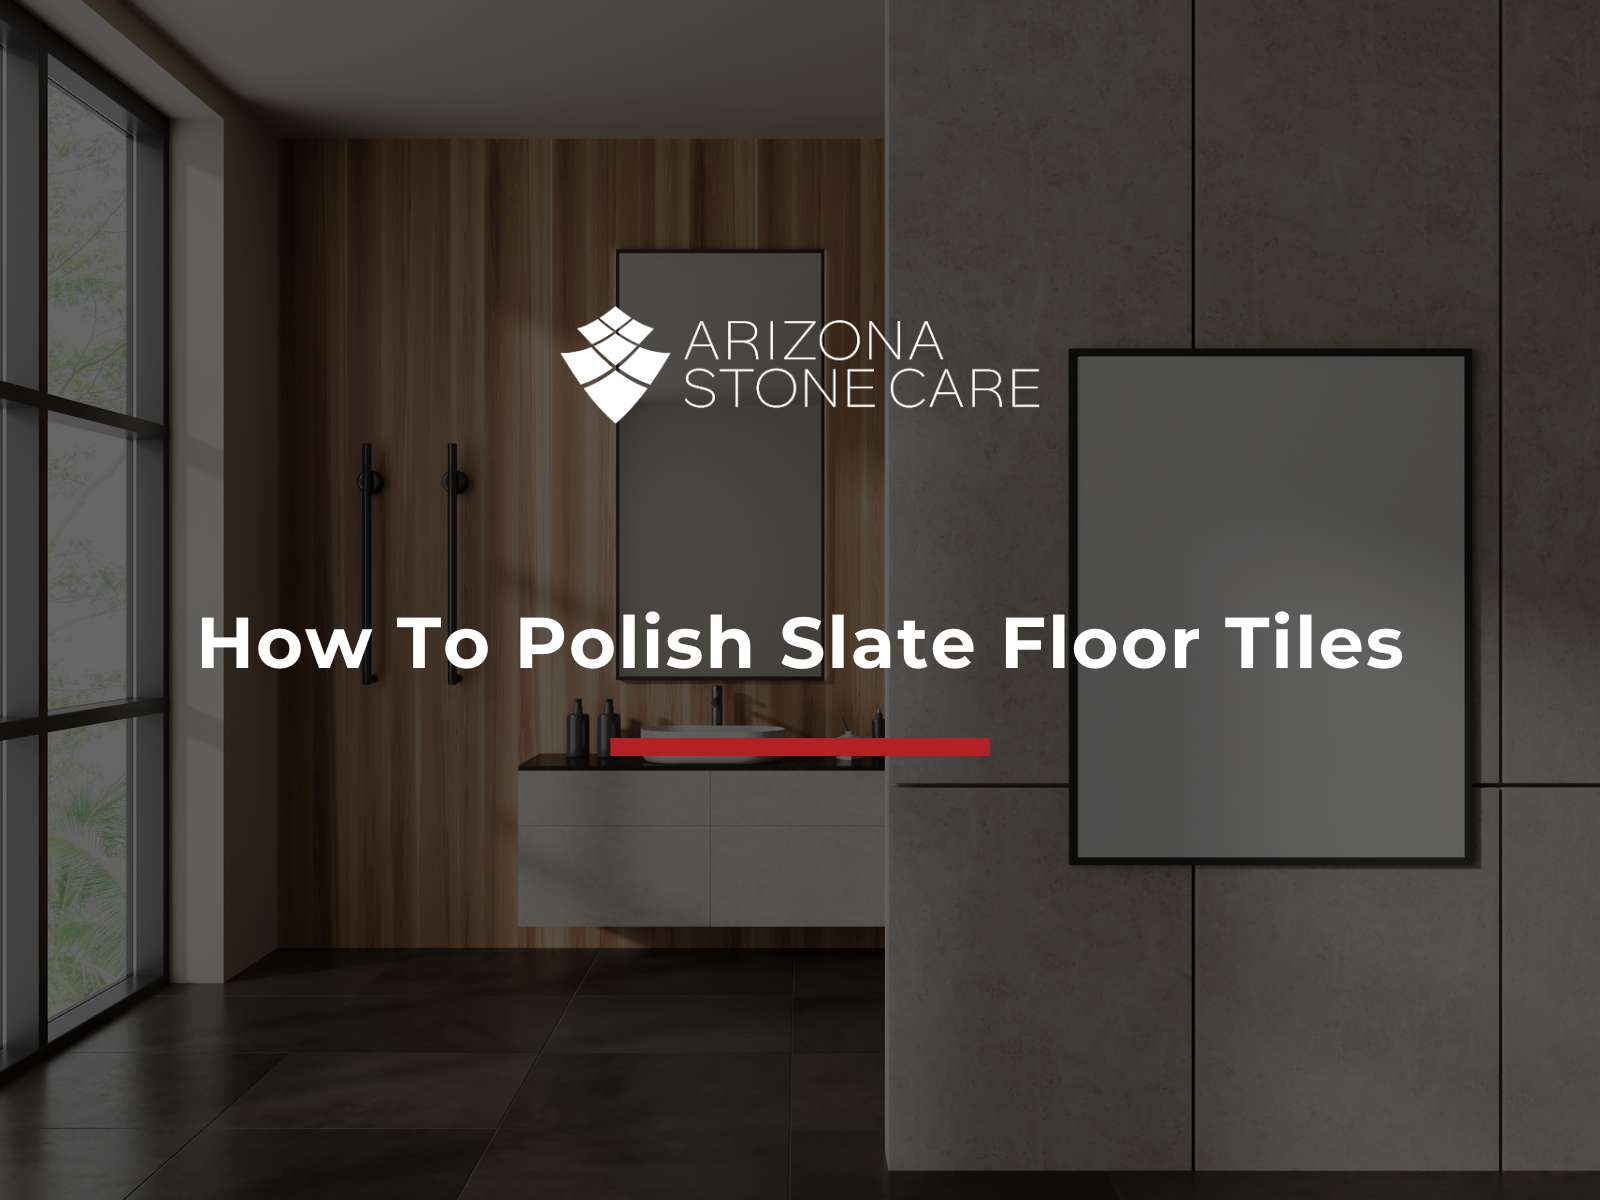 How To Polish Slate Floor Tiles